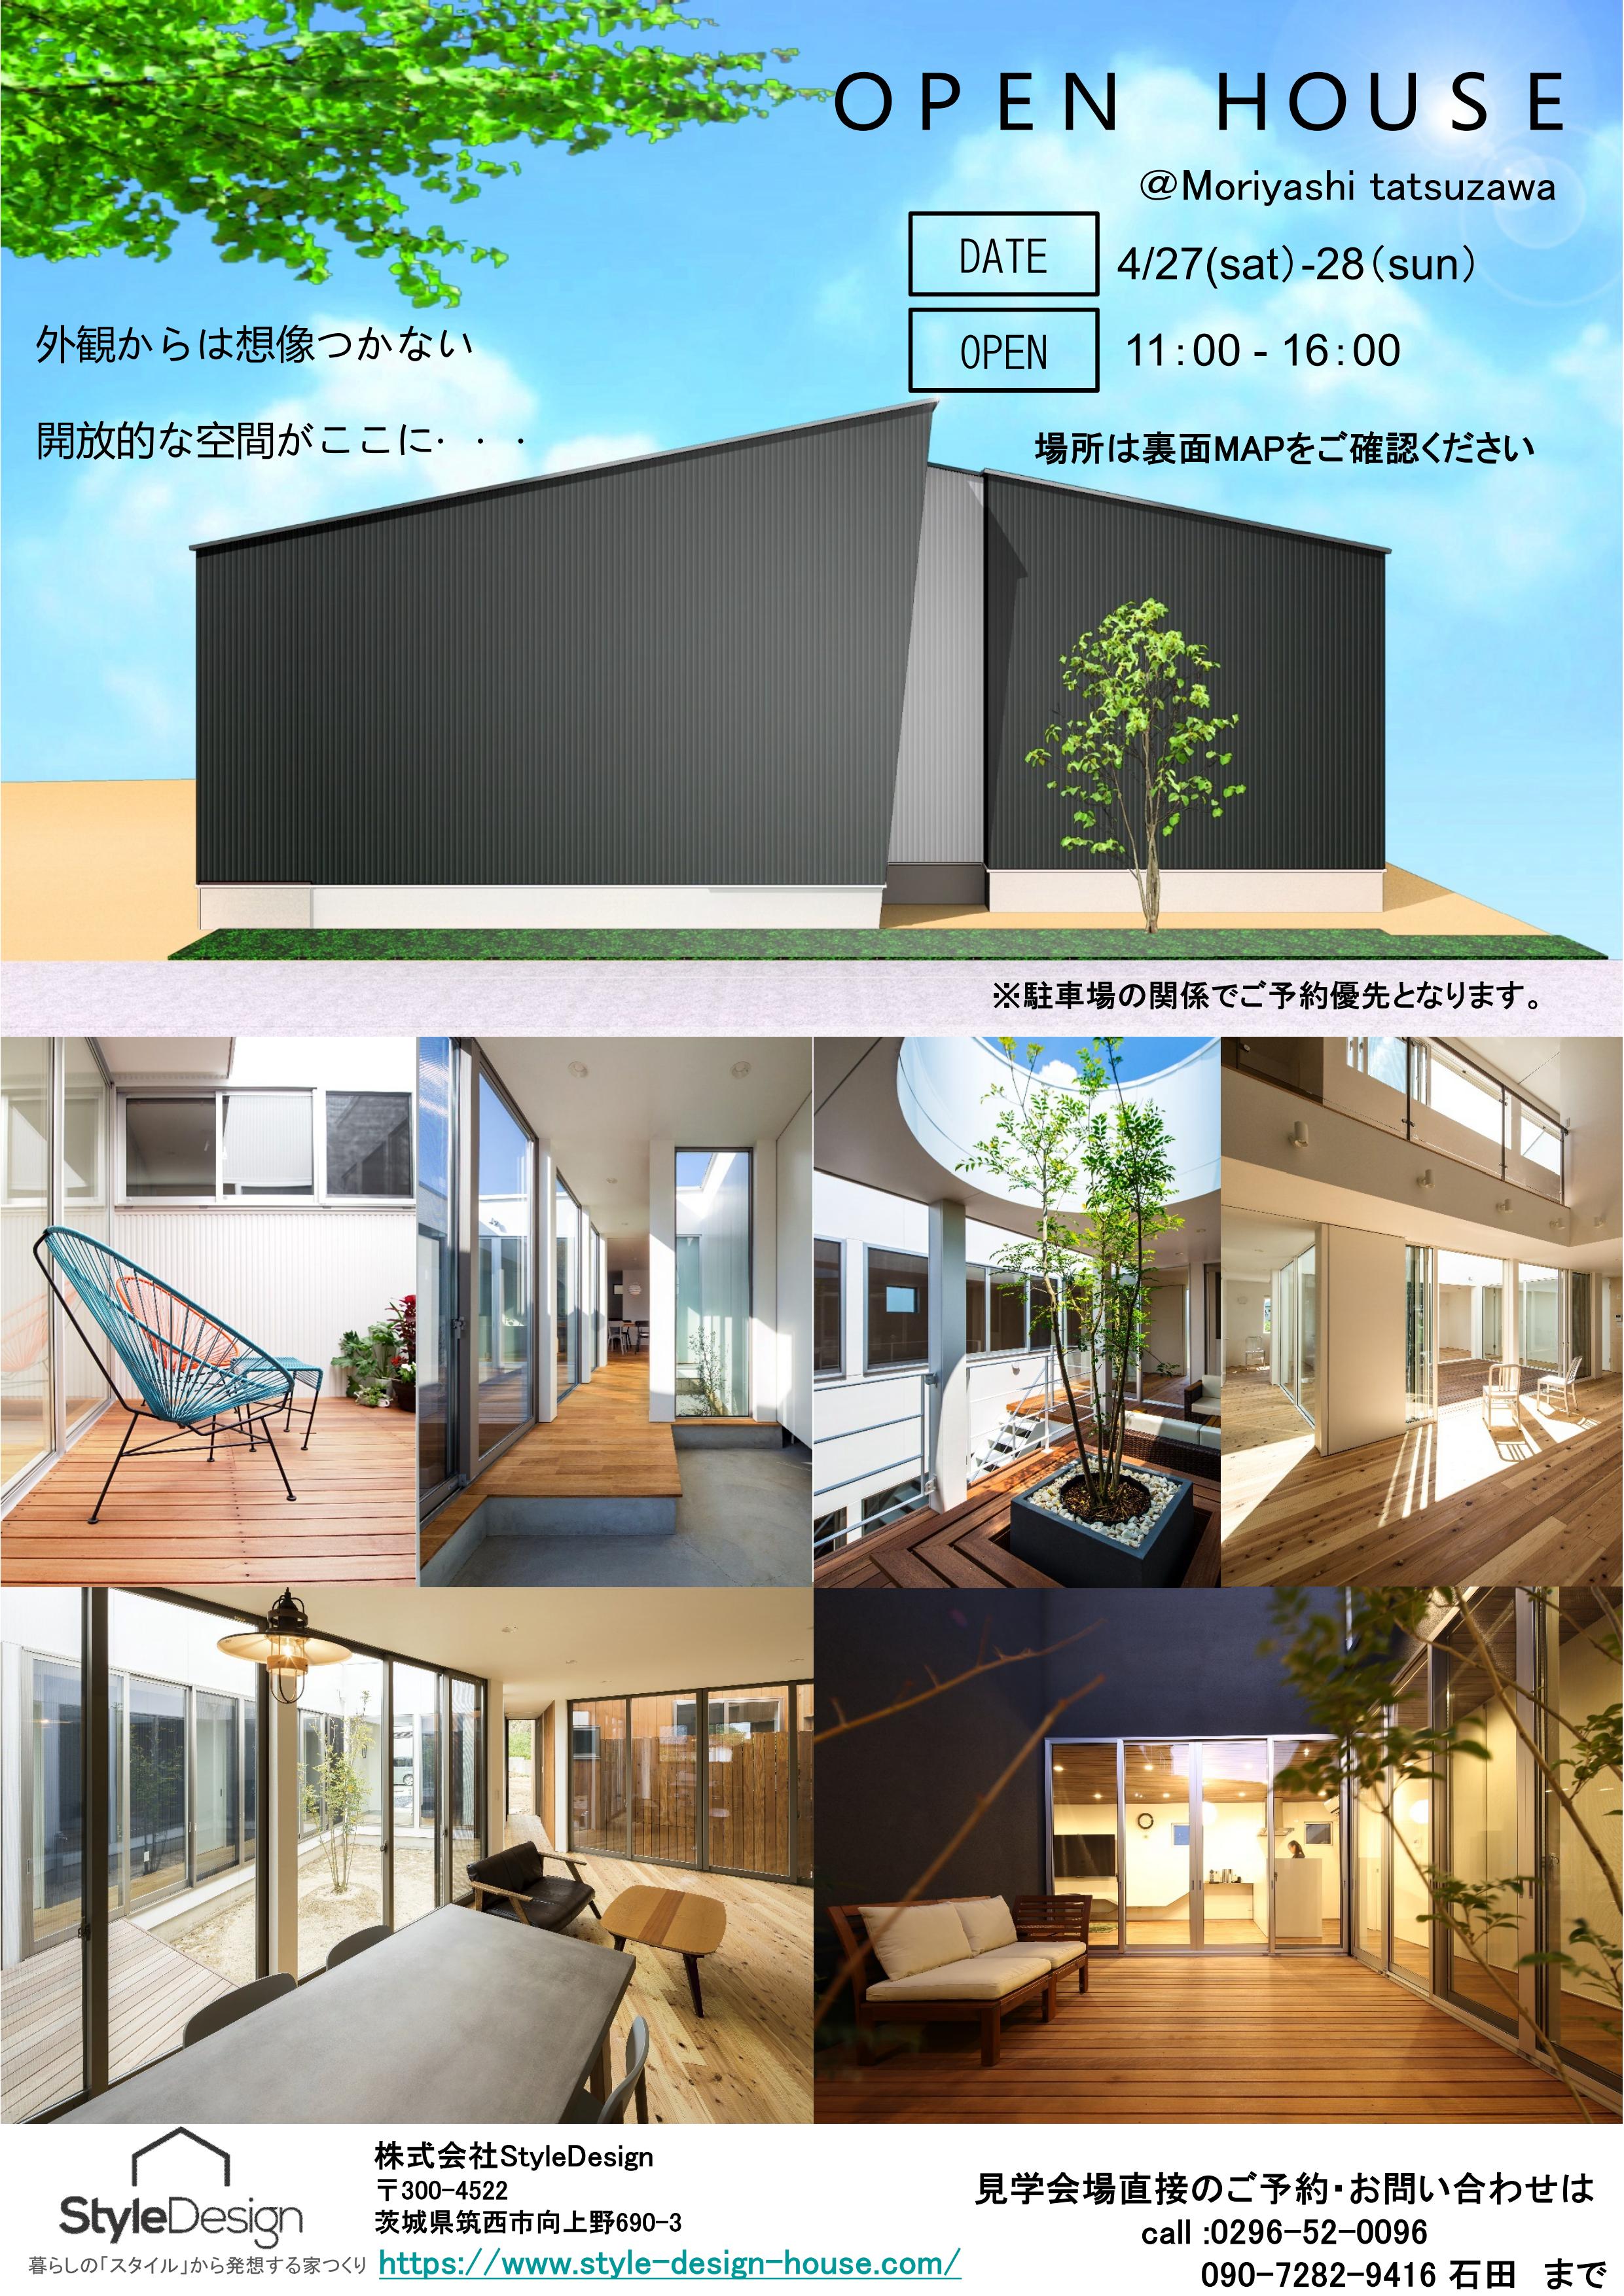 OPEN HOUSE「外観からは想像つかない開放的空間」in 茨城県守谷市立沢